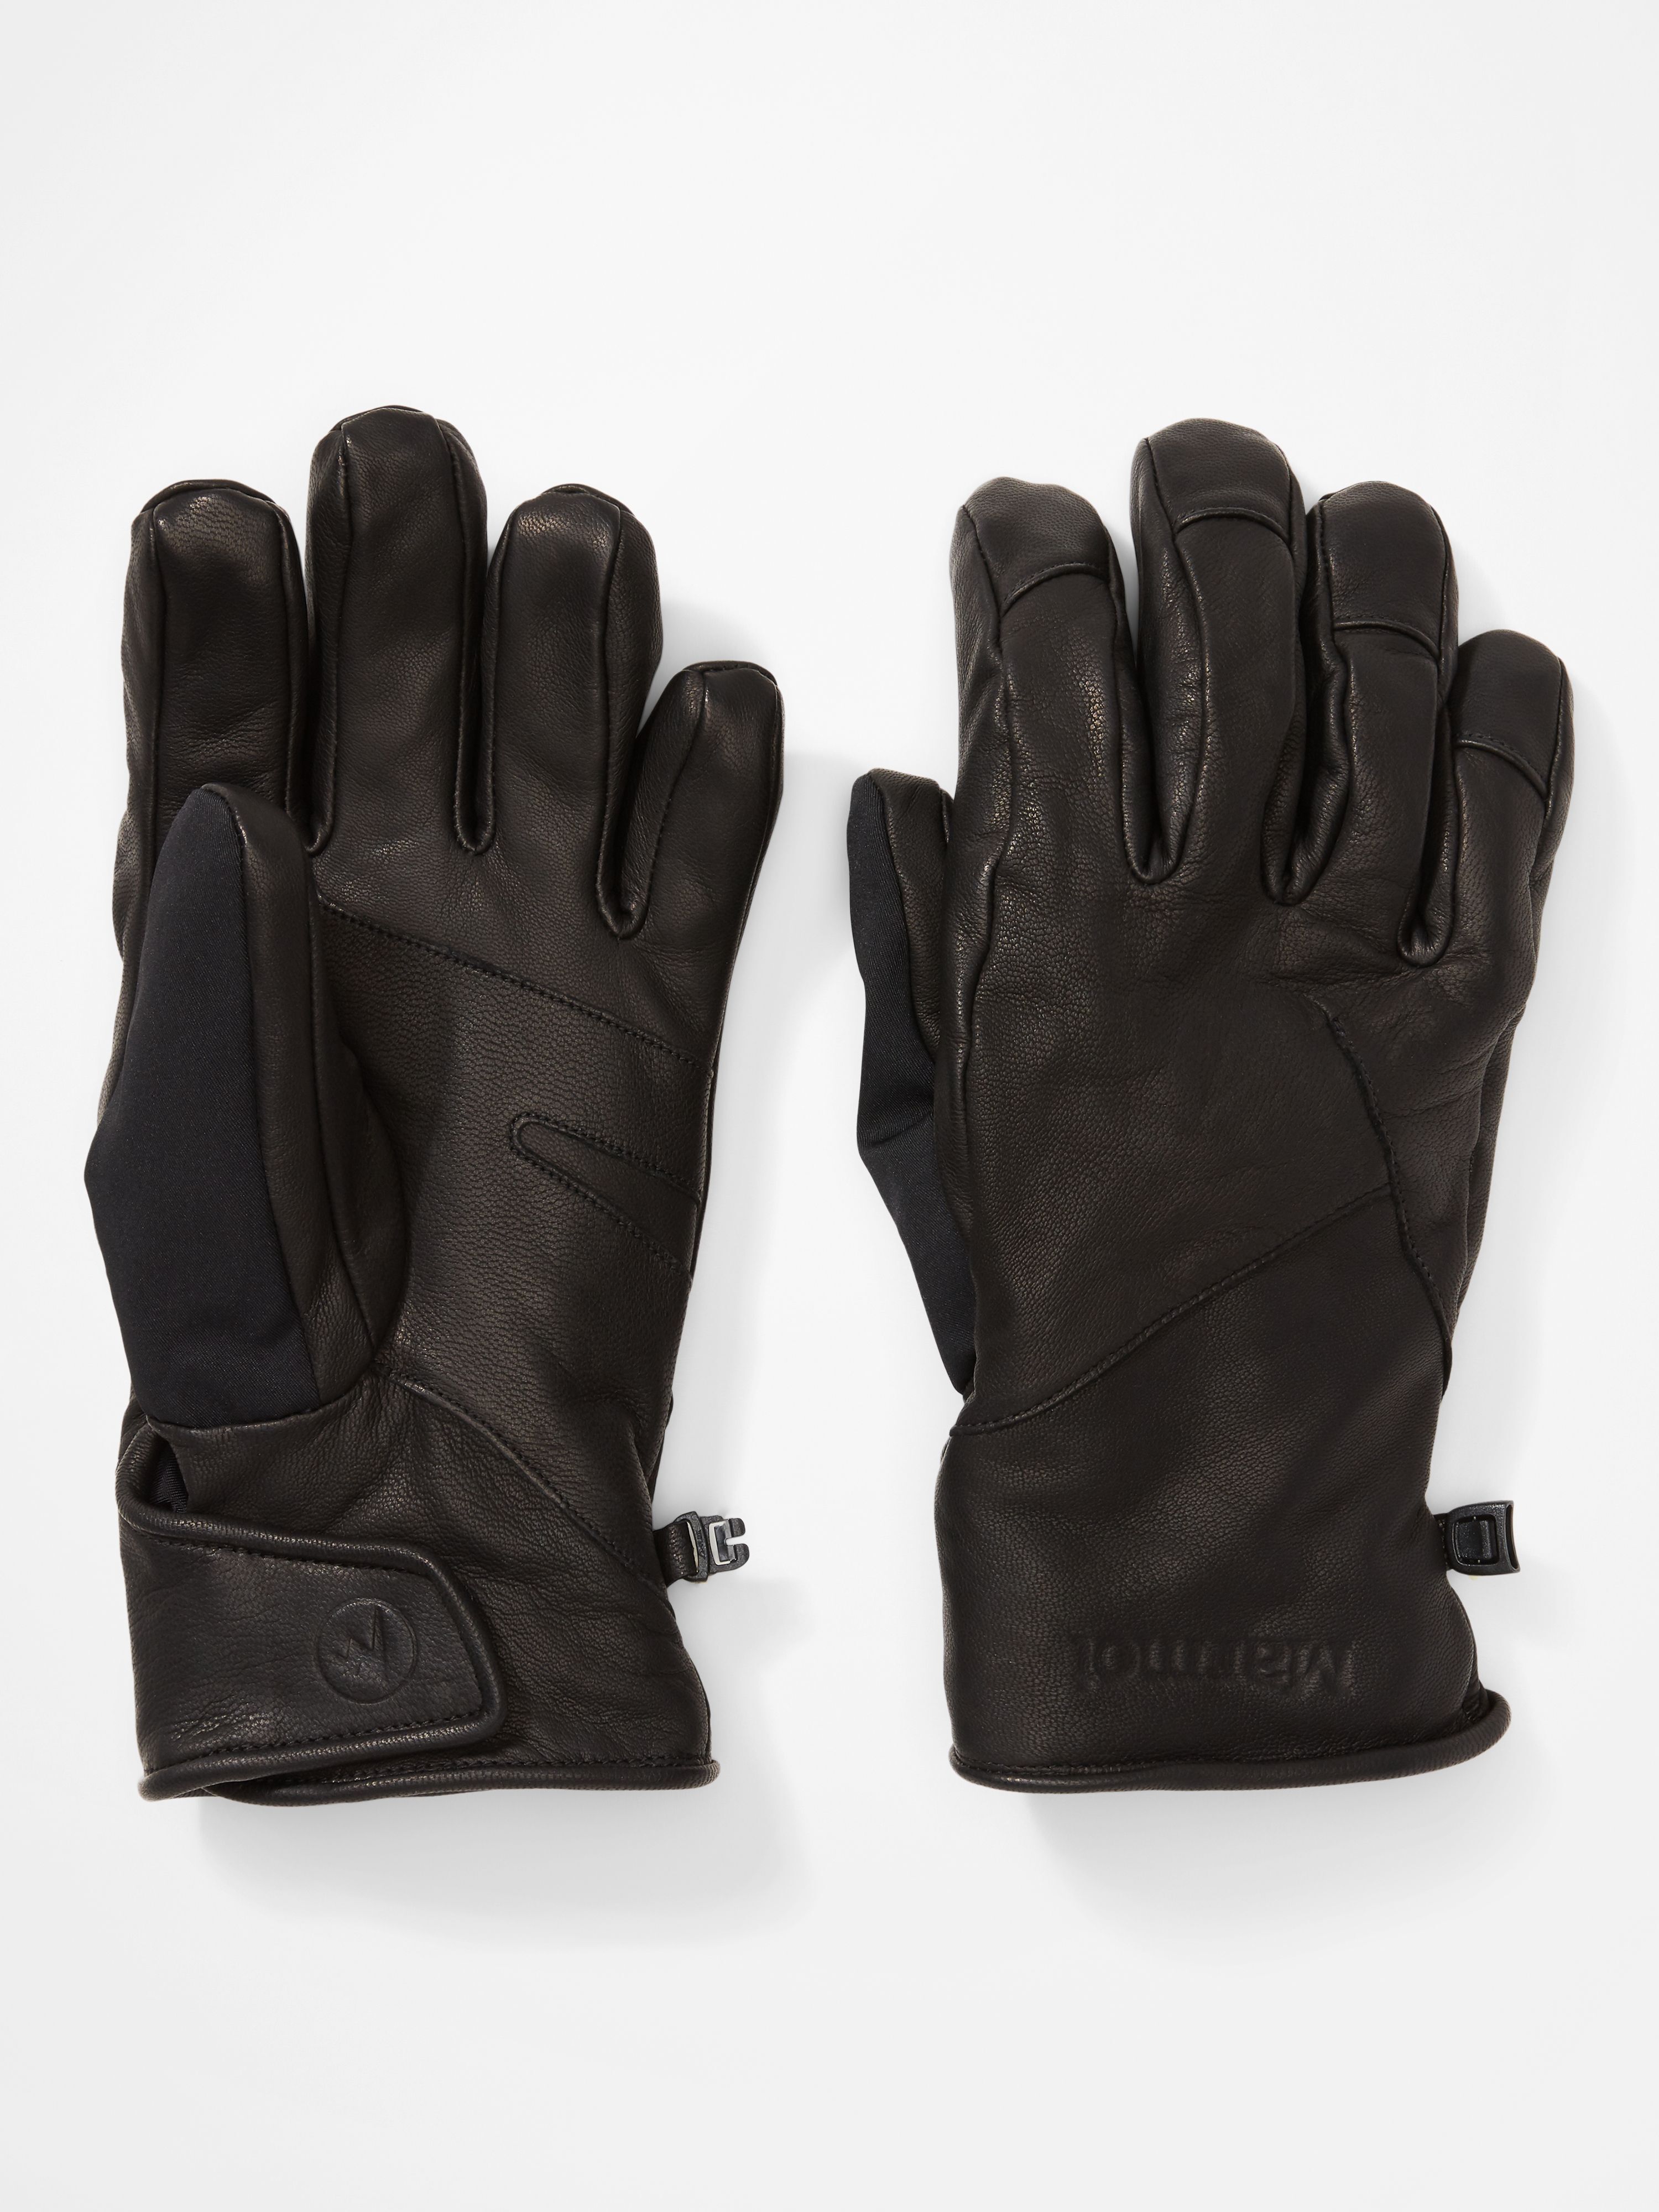 Marmot Dragtooth Undercuff Glove - Guantes de esquí